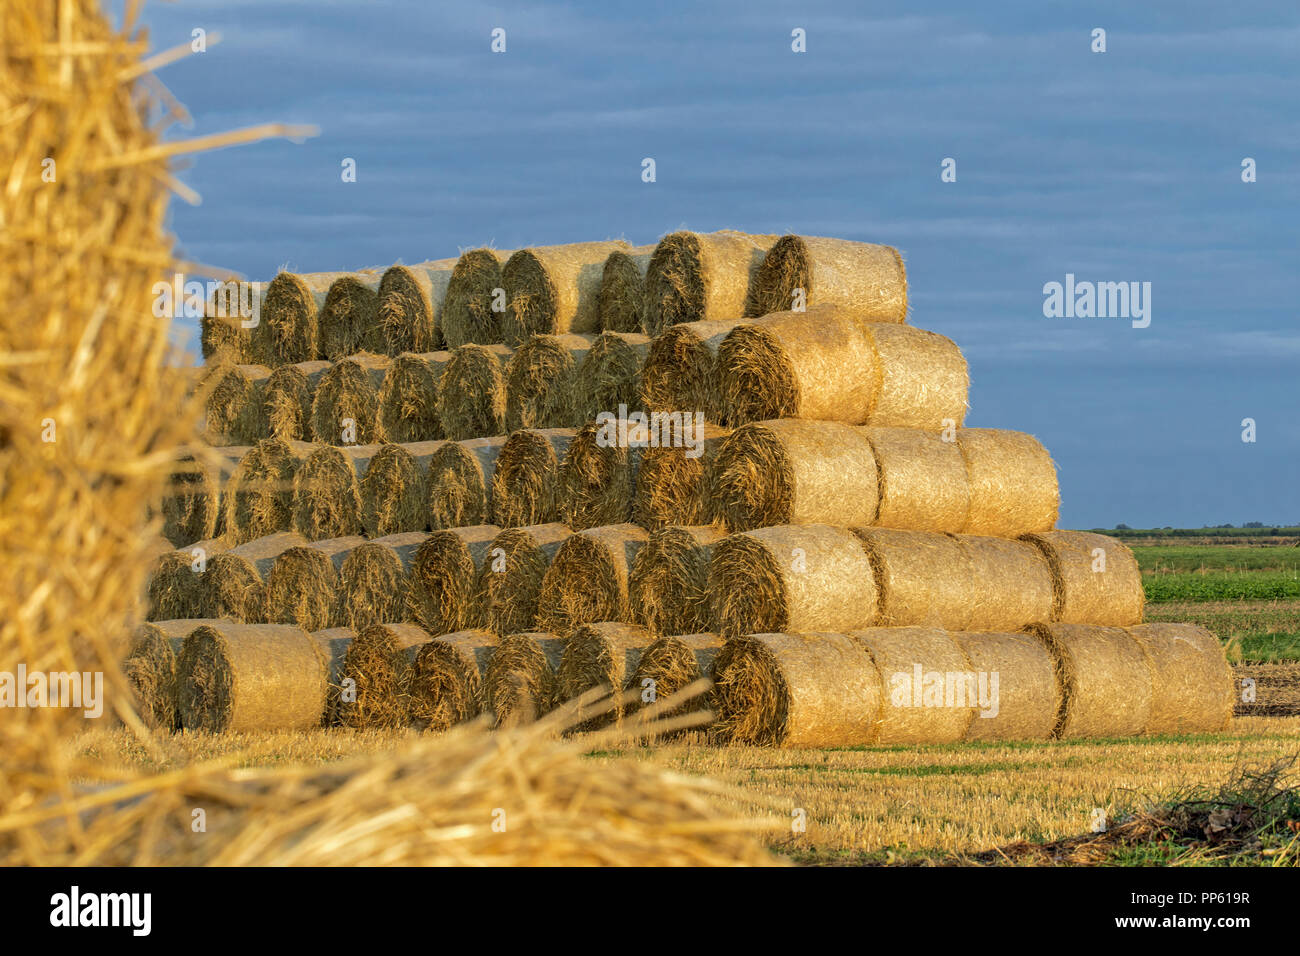 Stack of round hay-bales, Cambridgeshire, England Stock Photo